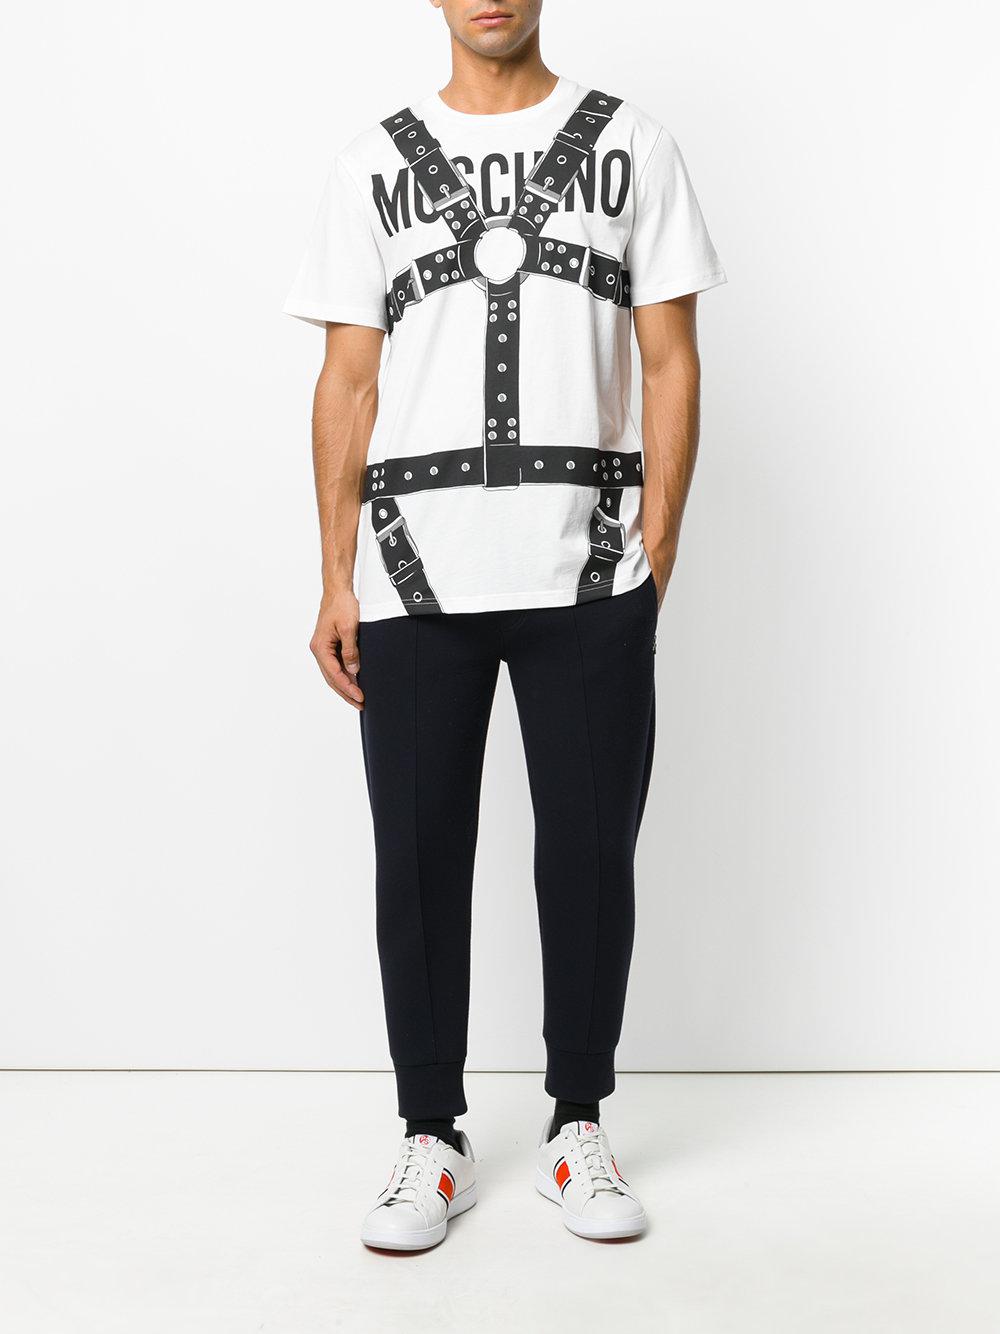 Moschino t-shirt men A071852401888 Black round collar short sleeves tee-shirt